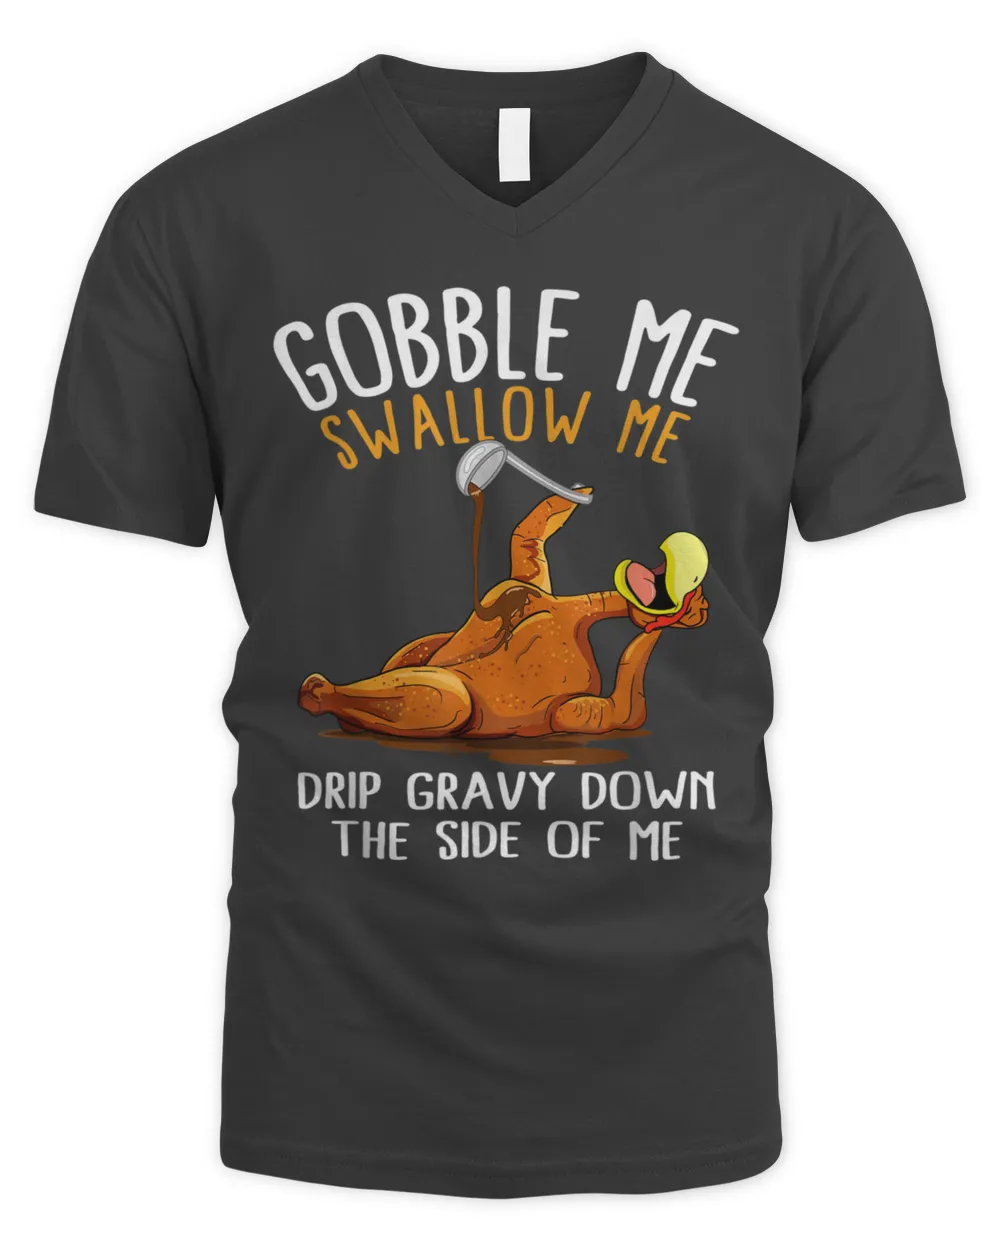 Gobble Me Swallow Me Shirt - Funny Thanksgiving